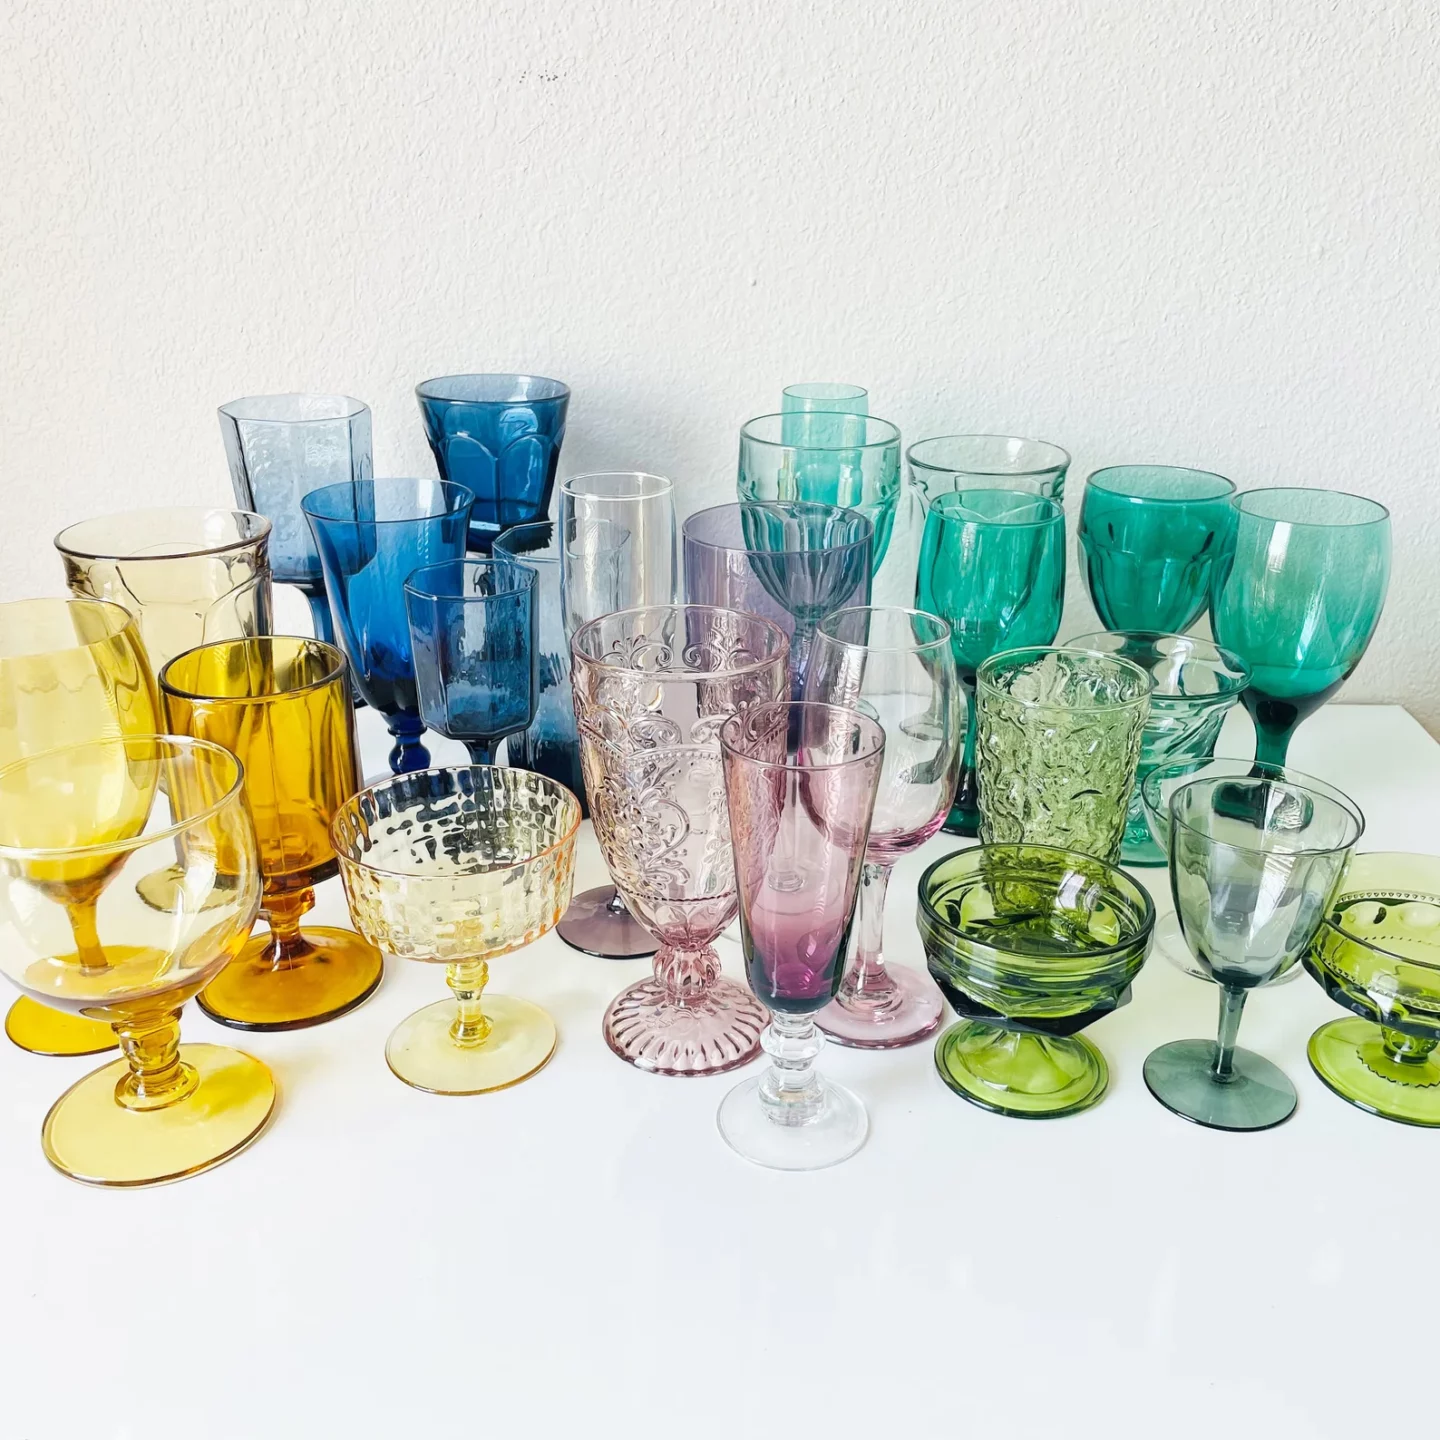 Assortment of vintage color glassware sets